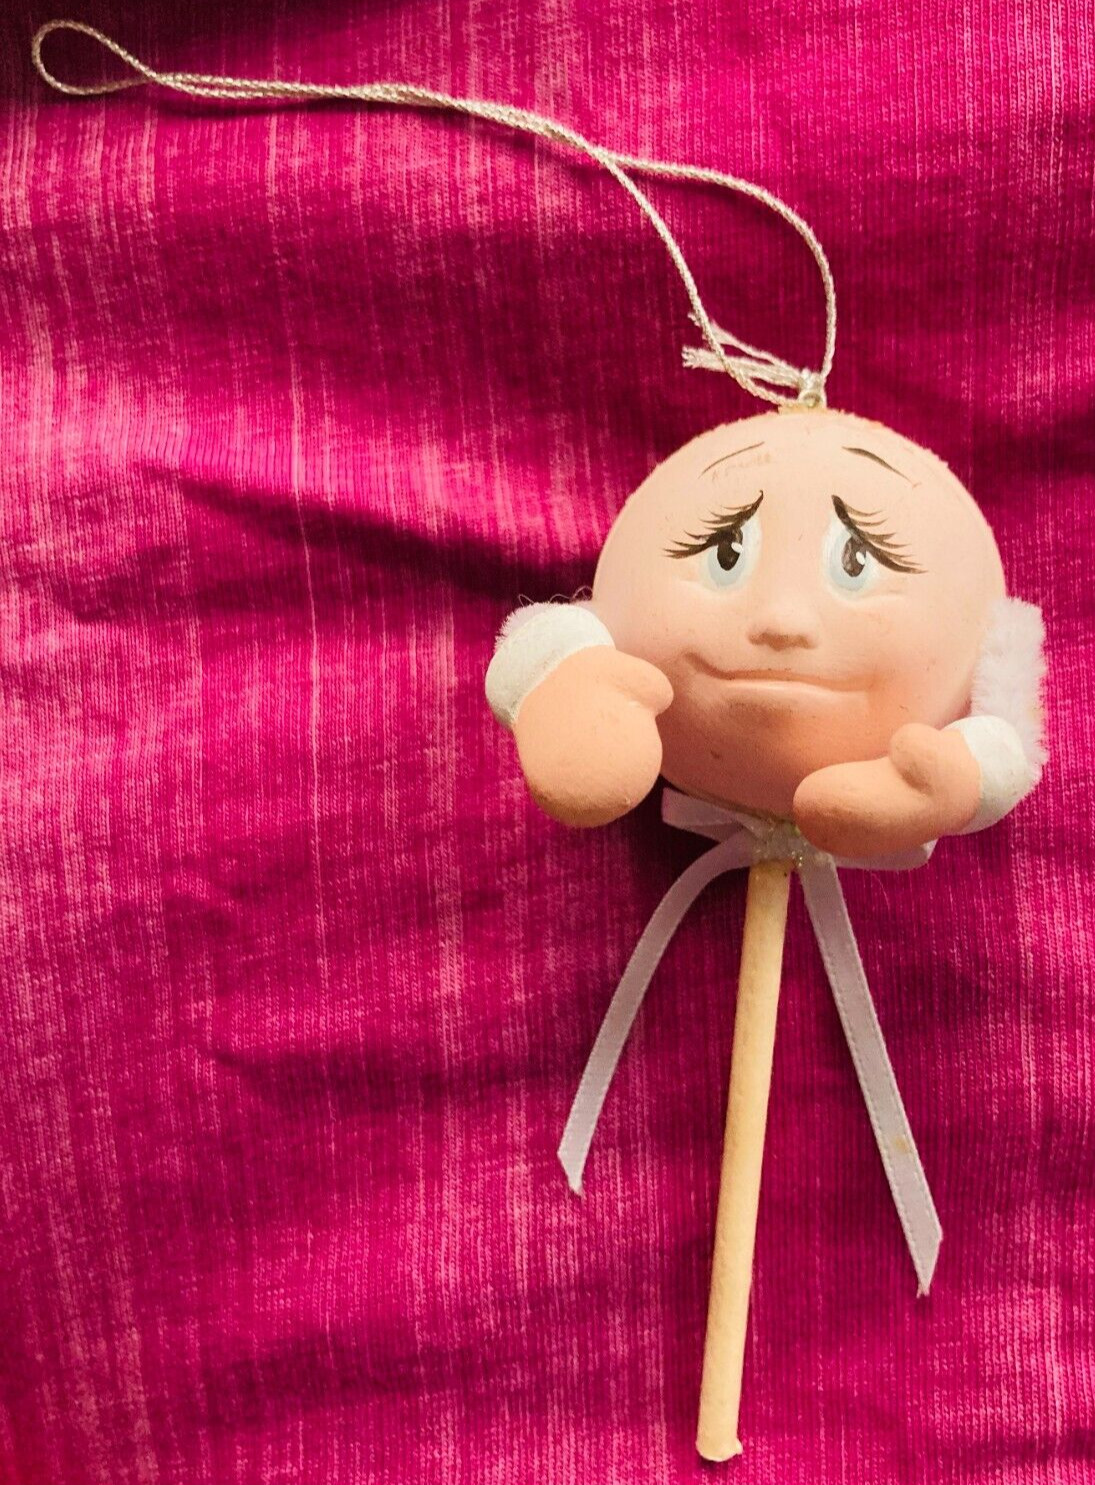 1993 ~ Sad-Faced Baby Lollipop Xmas Ornament ~ Vintage ~ One of a Kind ~ Ceramic